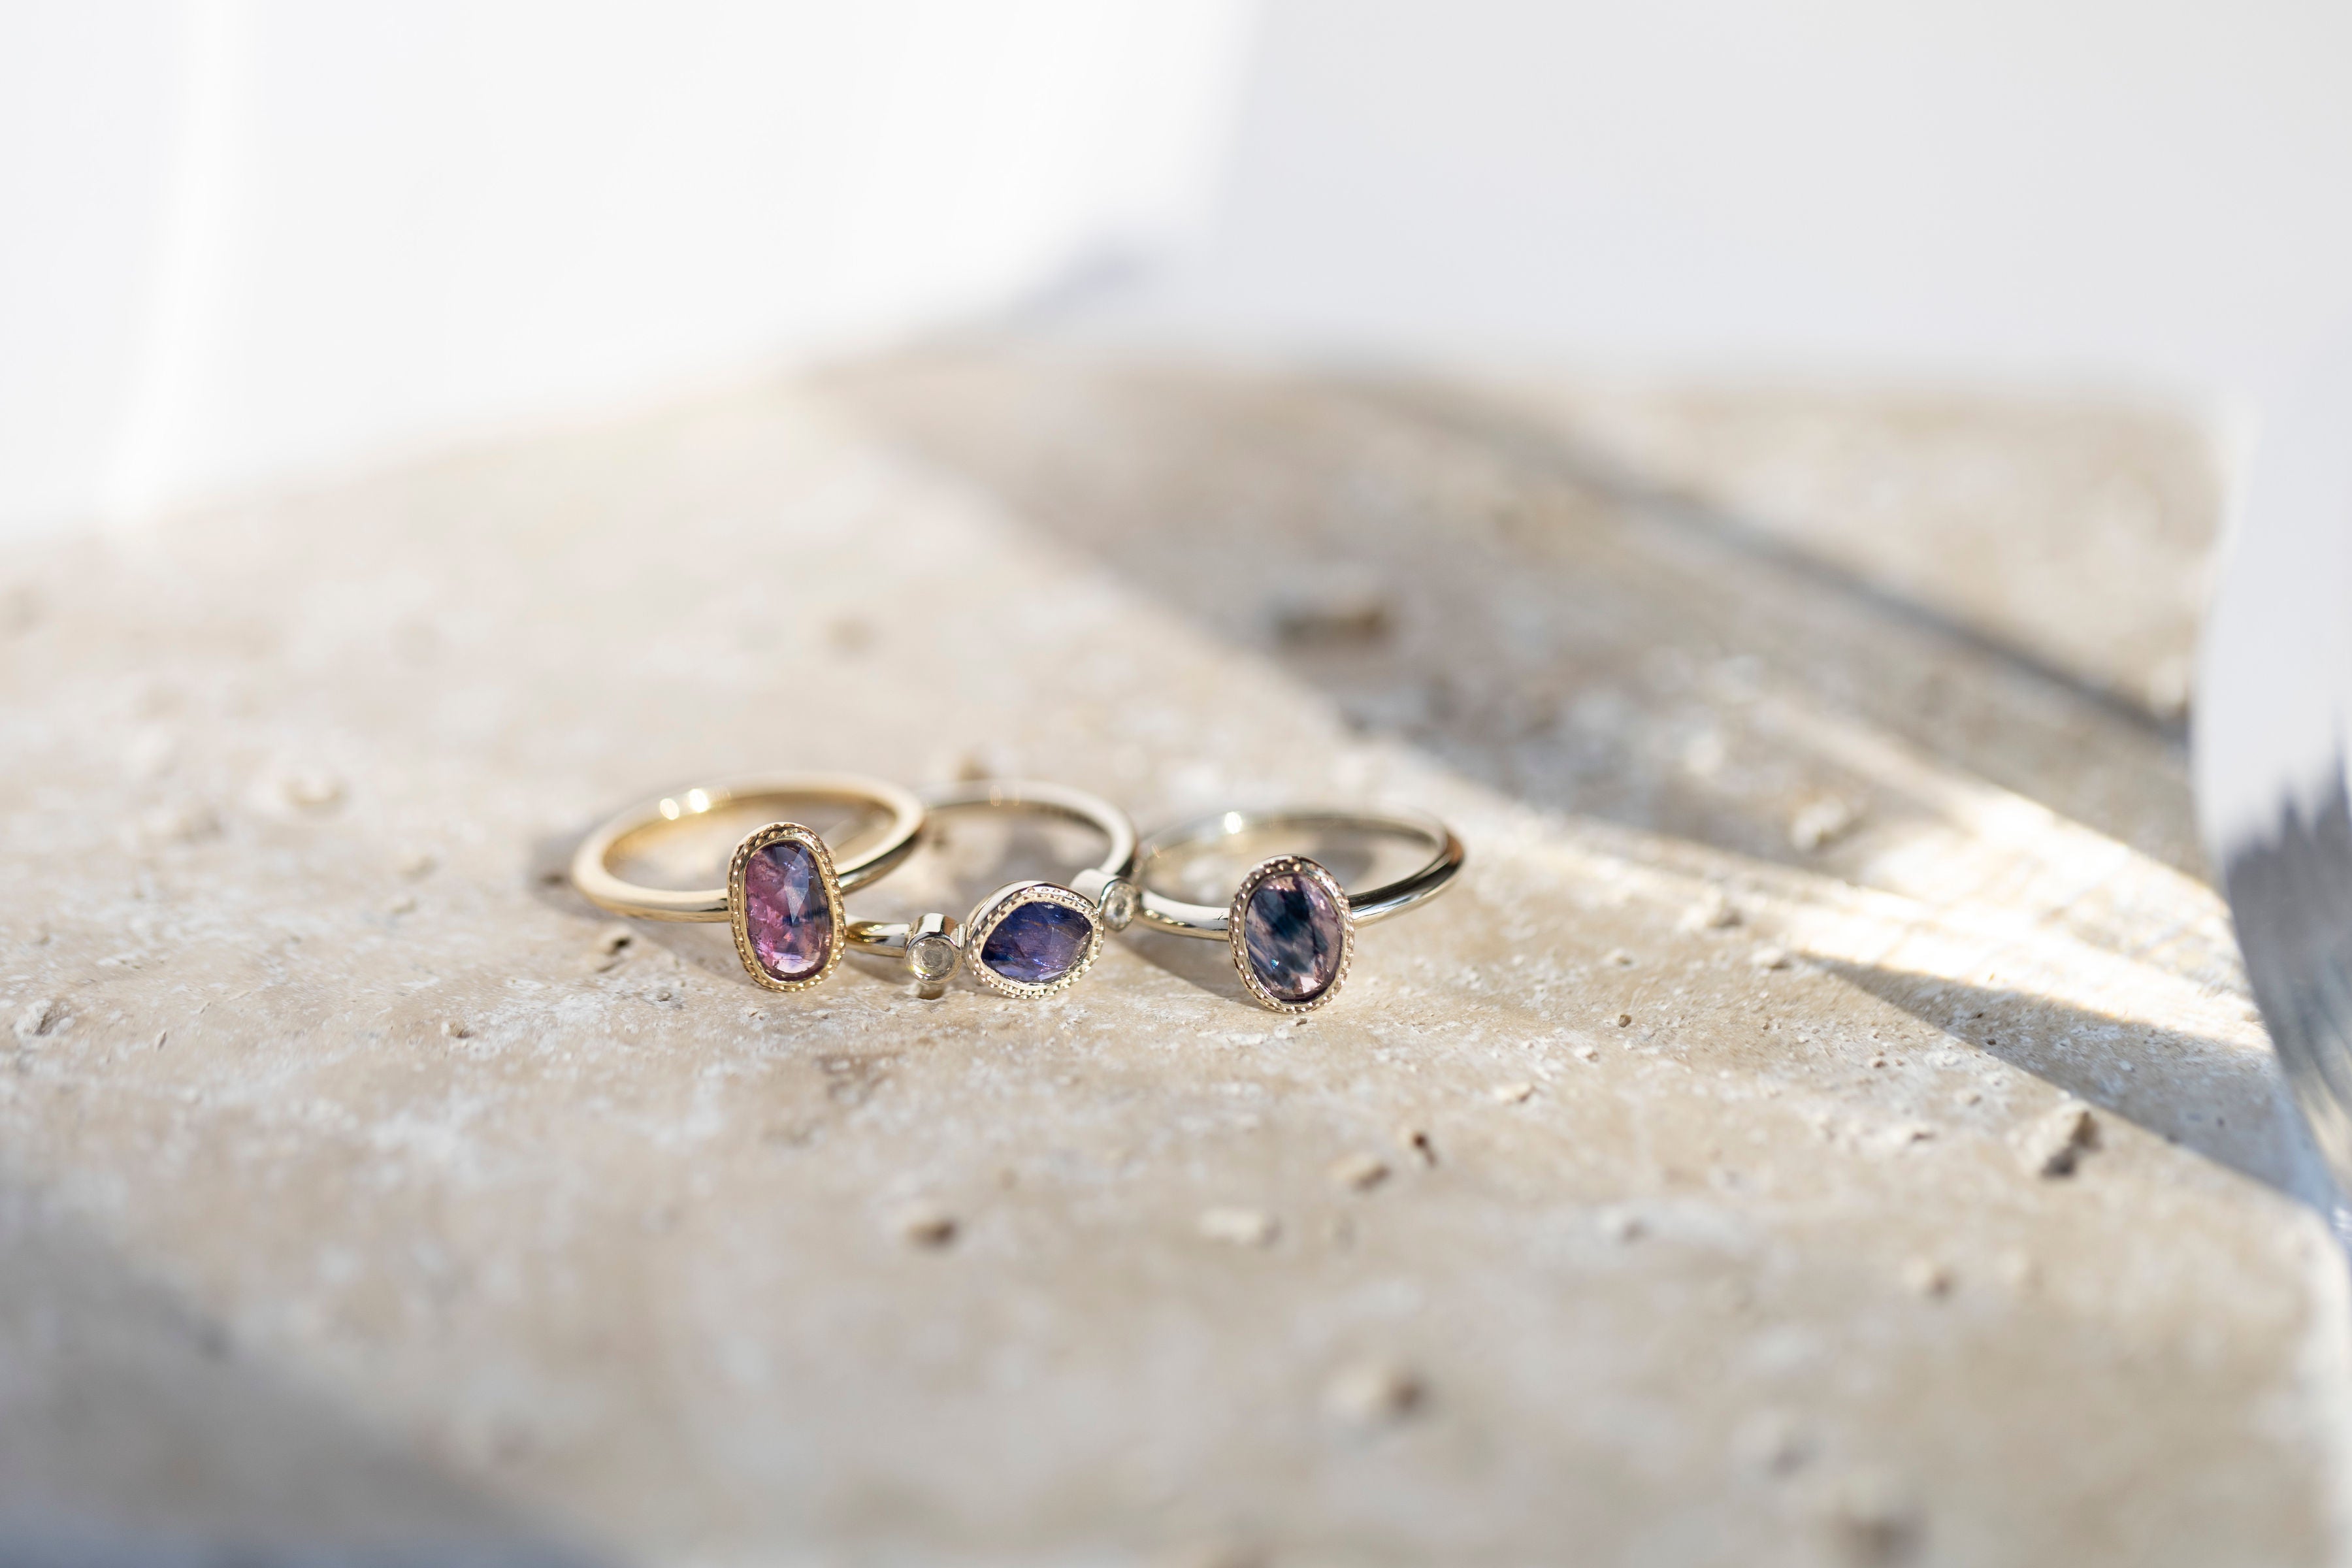 Poisonberry Sapphire Ring